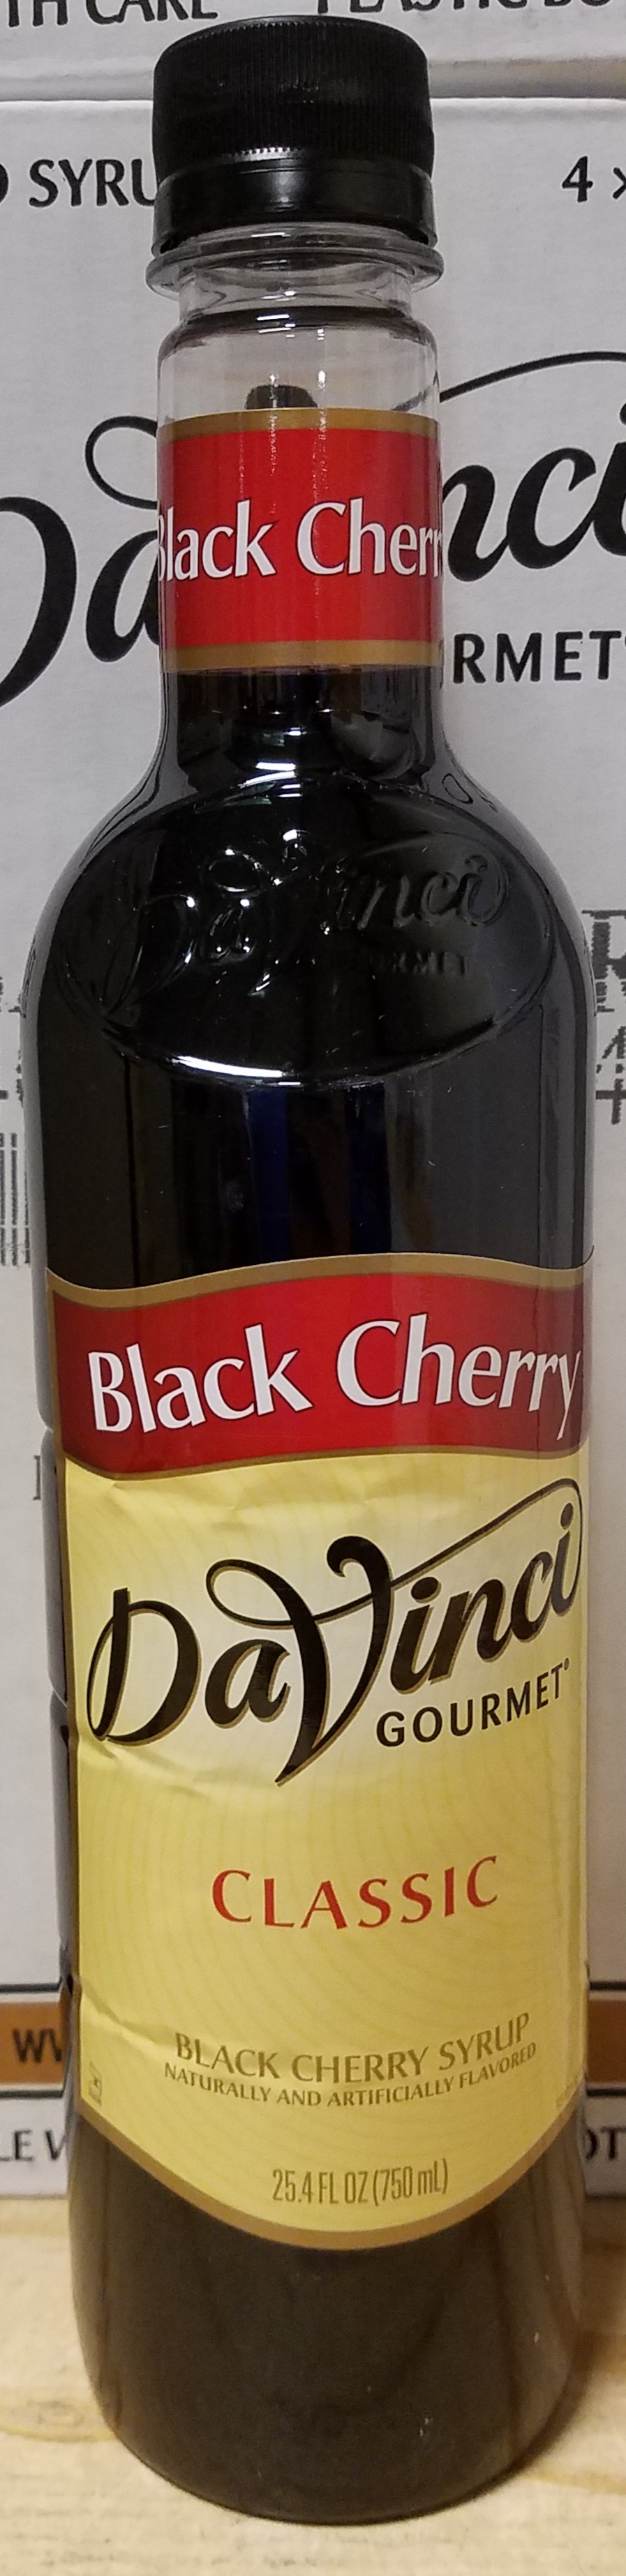 DaVinci Black Cherry 4/750ml - Sold by EA